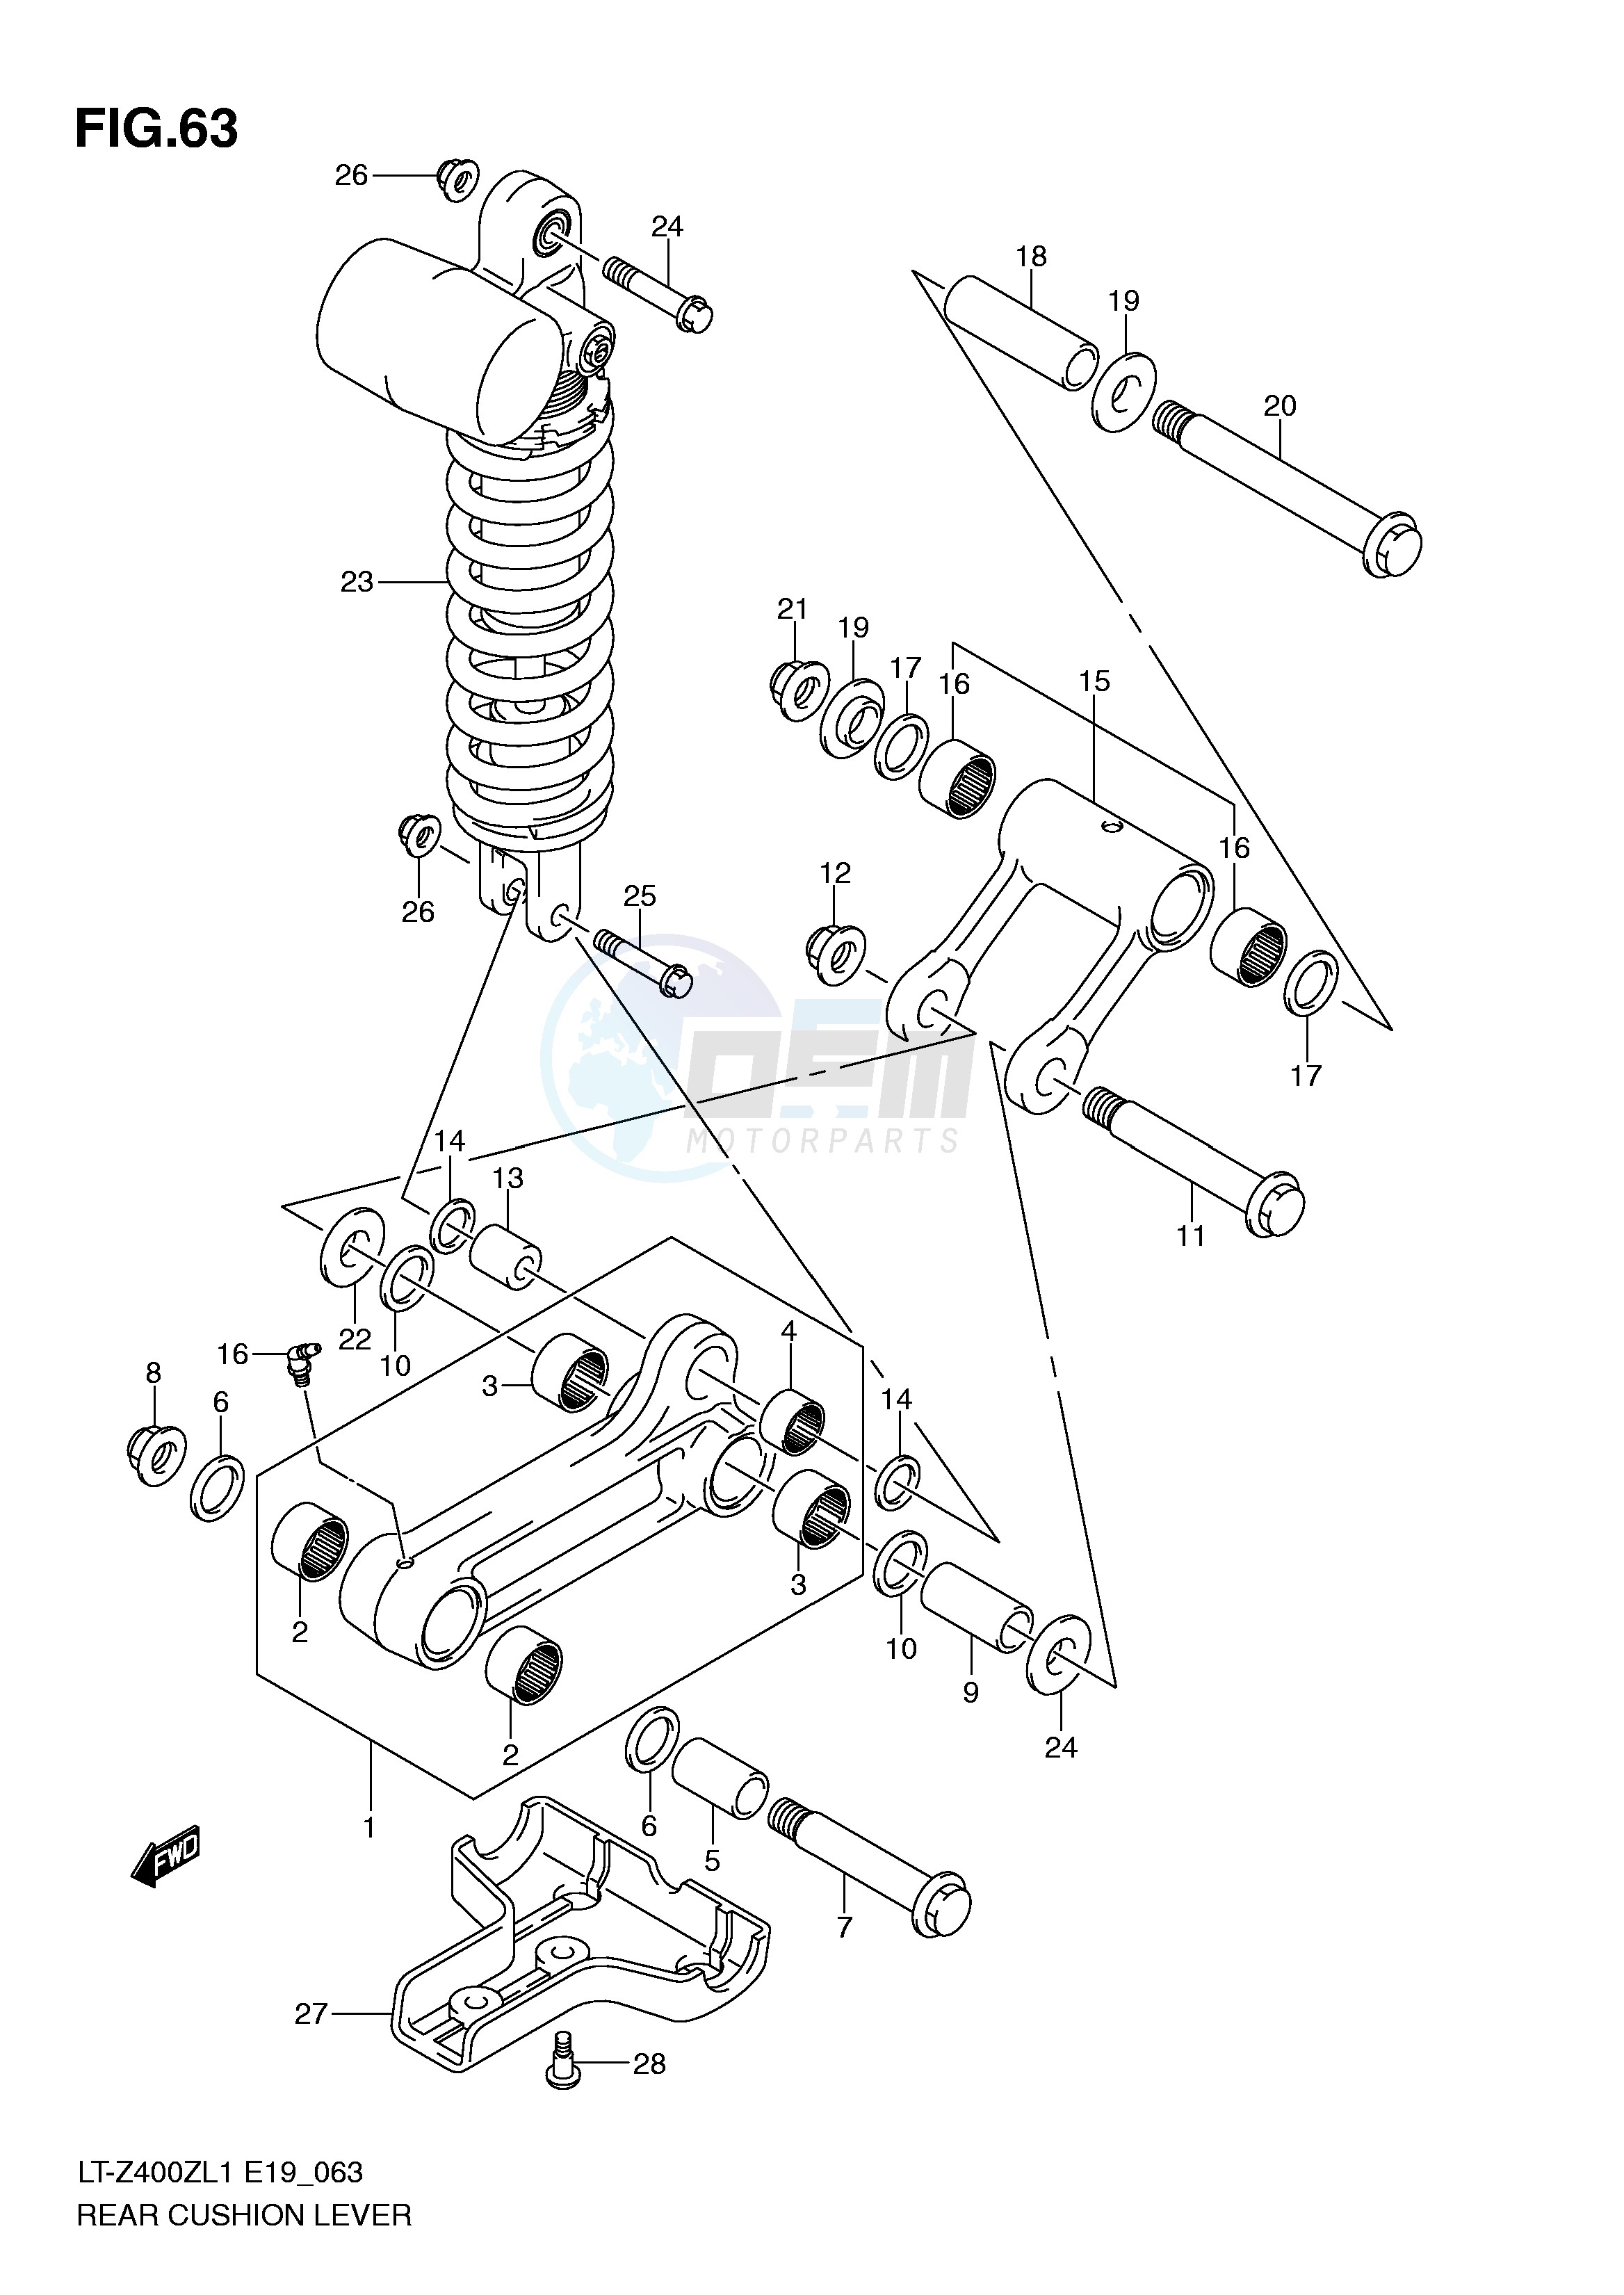 REAR CUSHION LEVER (LT-Z400ZL1 E19) blueprint